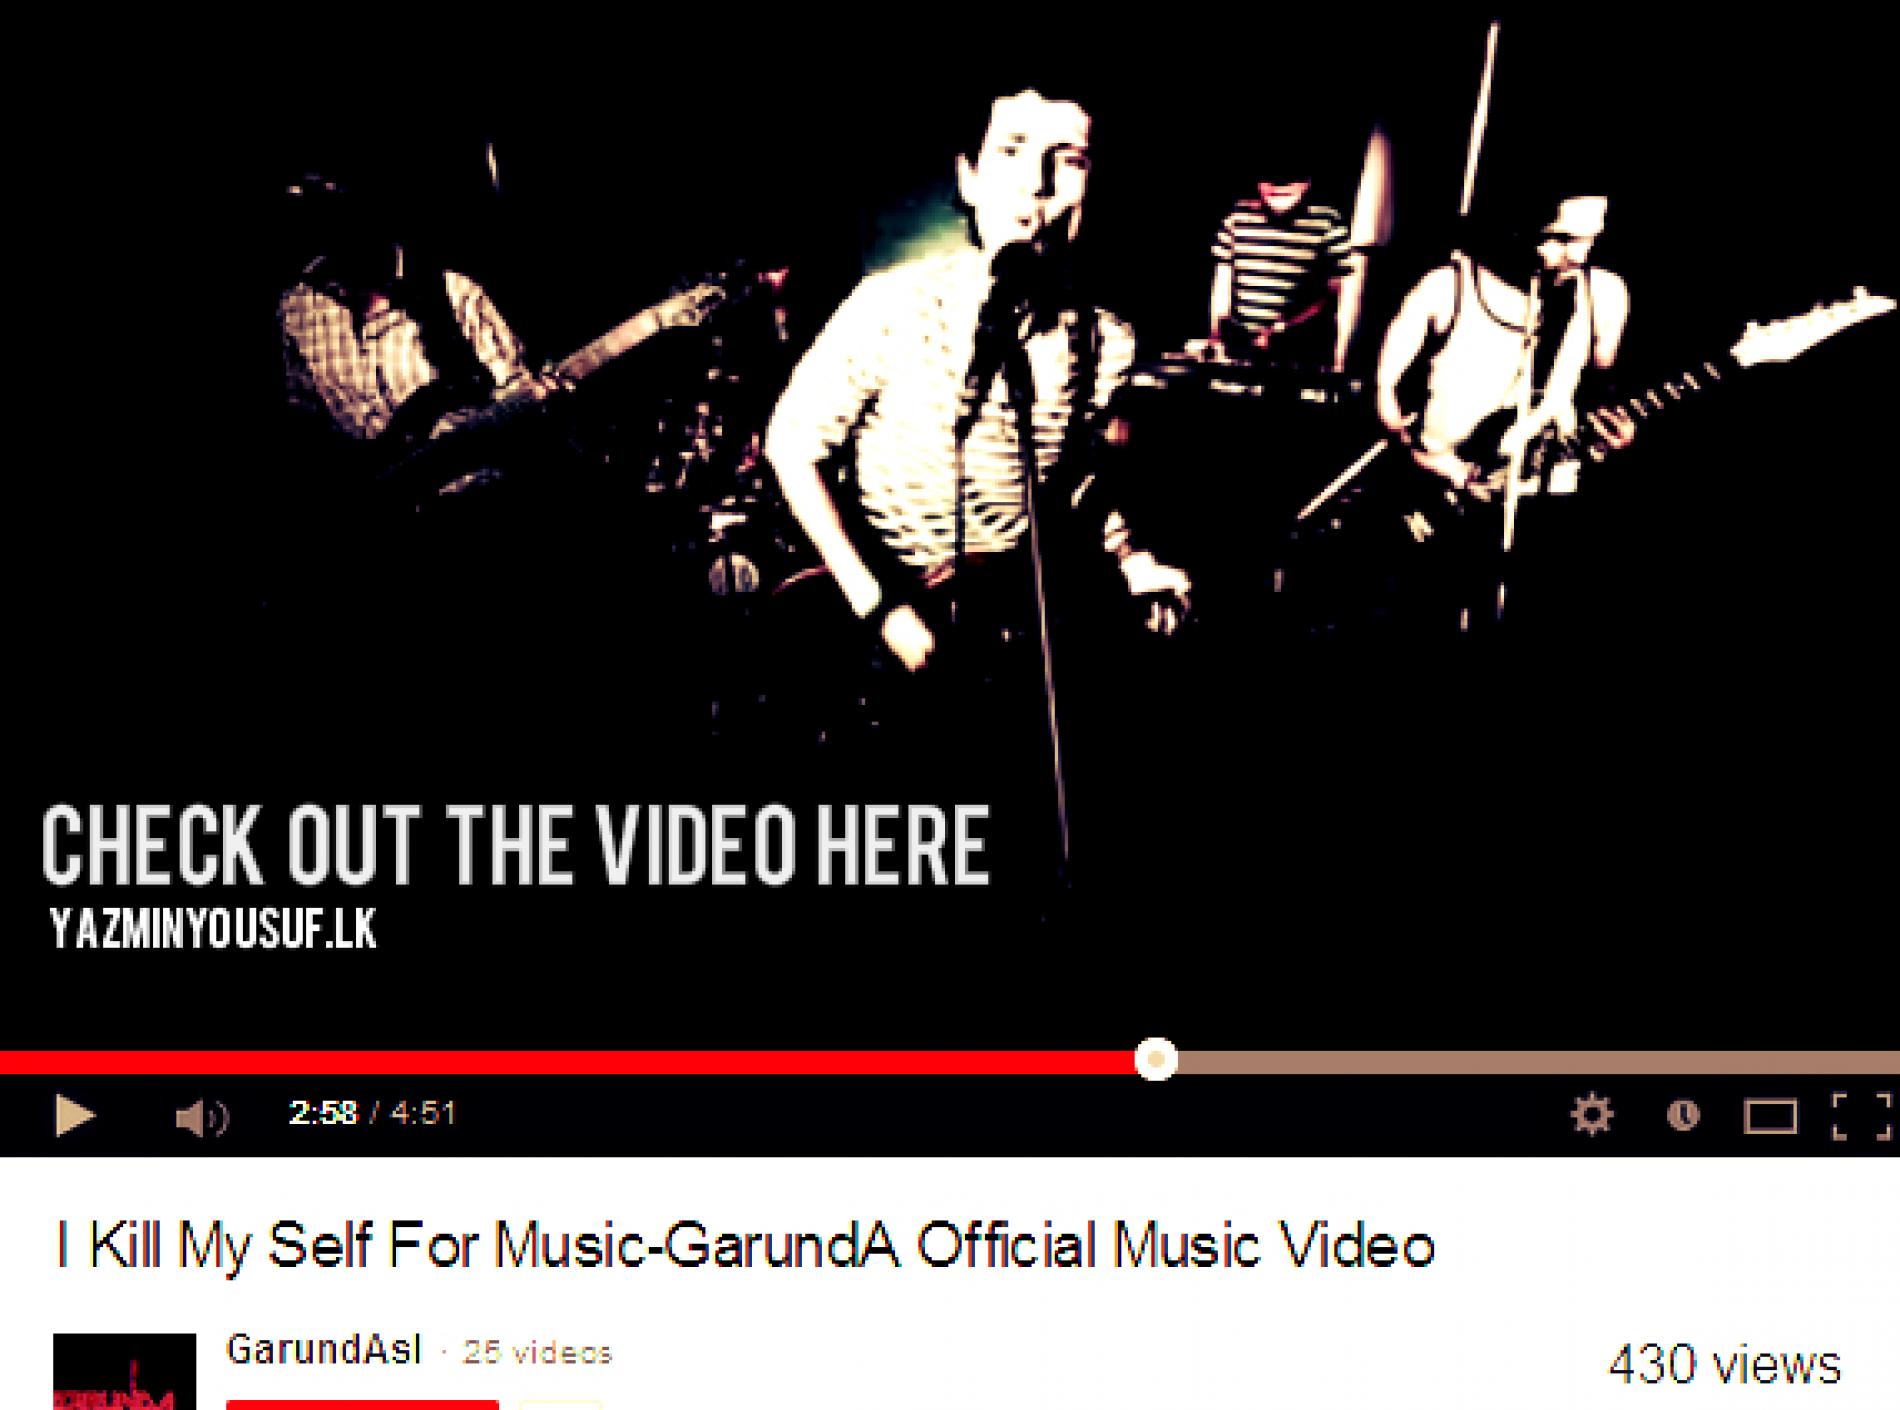 GarundA: I Kill Myself For Music-The Video